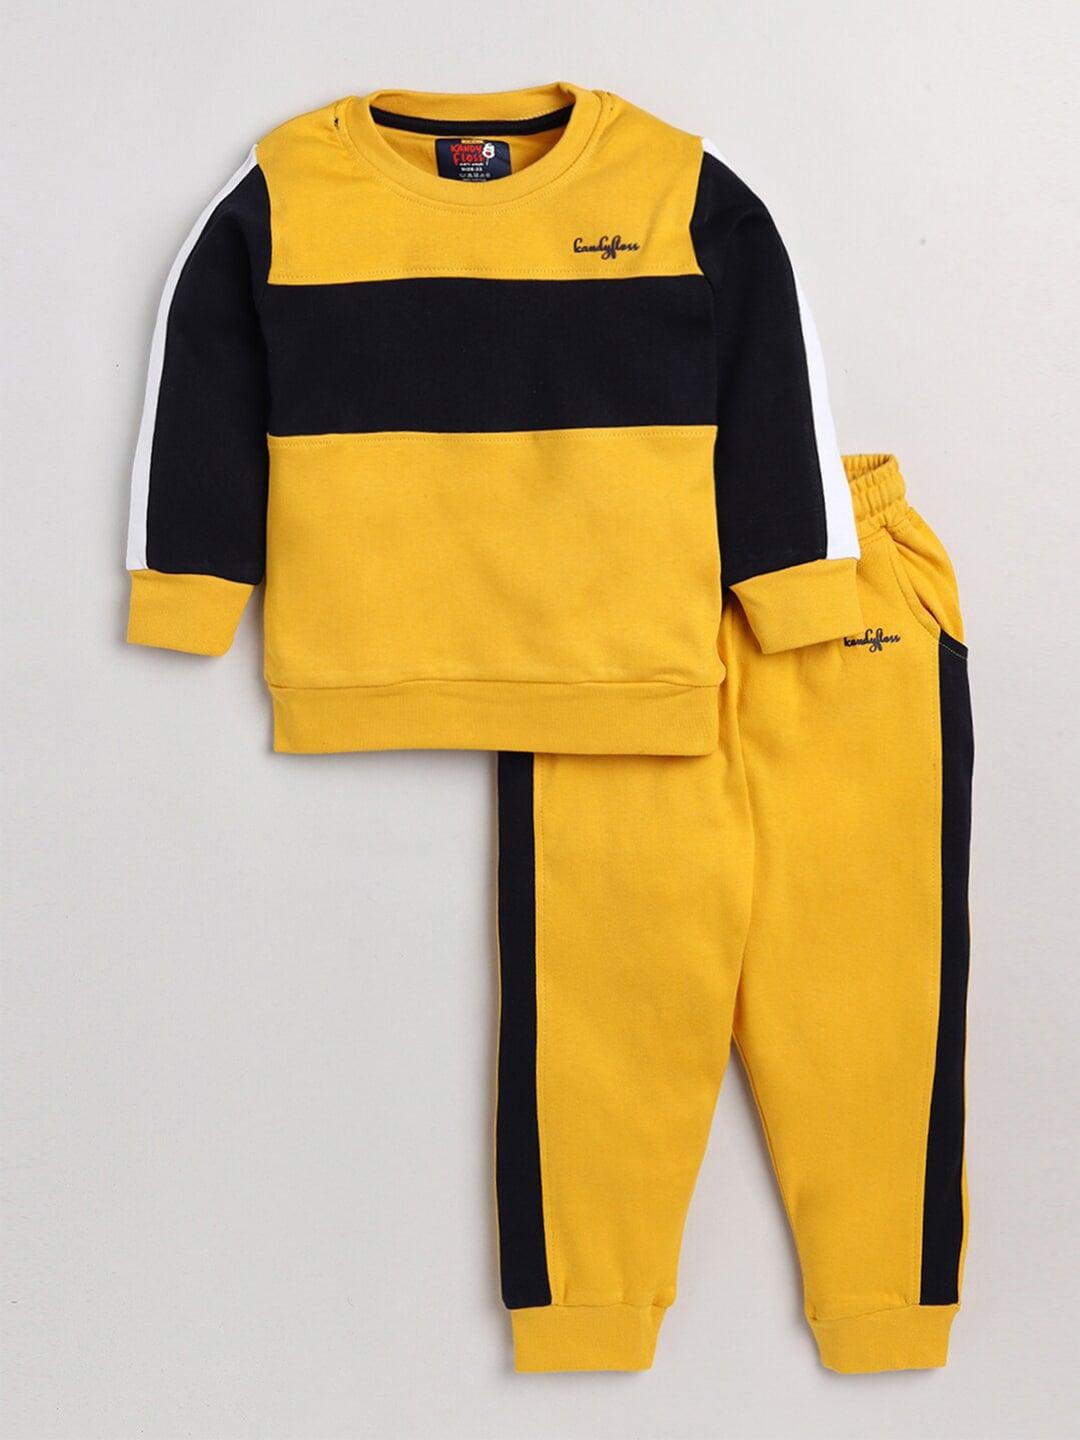 AMUL Kandyfloss Unisex Kids Yellow & Black Colourblocked Cotton Top with Pyjamas